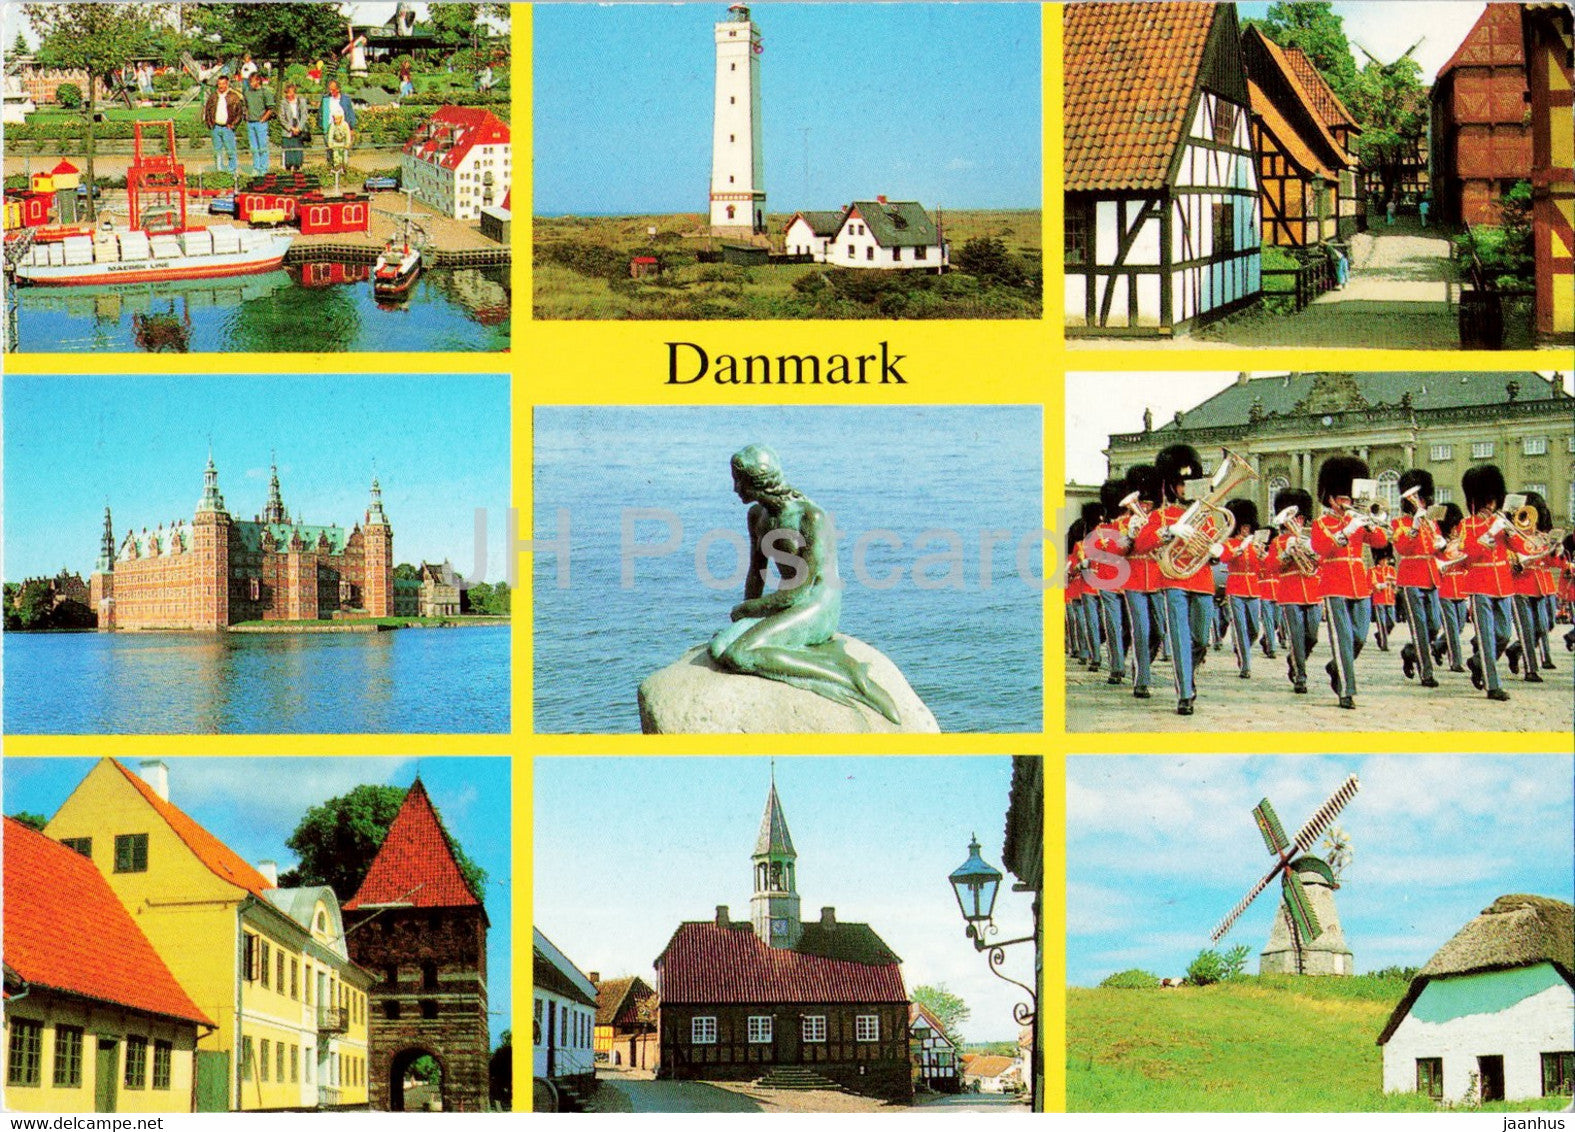 Denmark - windmill - lighthouse - Little Mermaid - Guard - multiview - 1993 - Denmark - used - JH Postcards